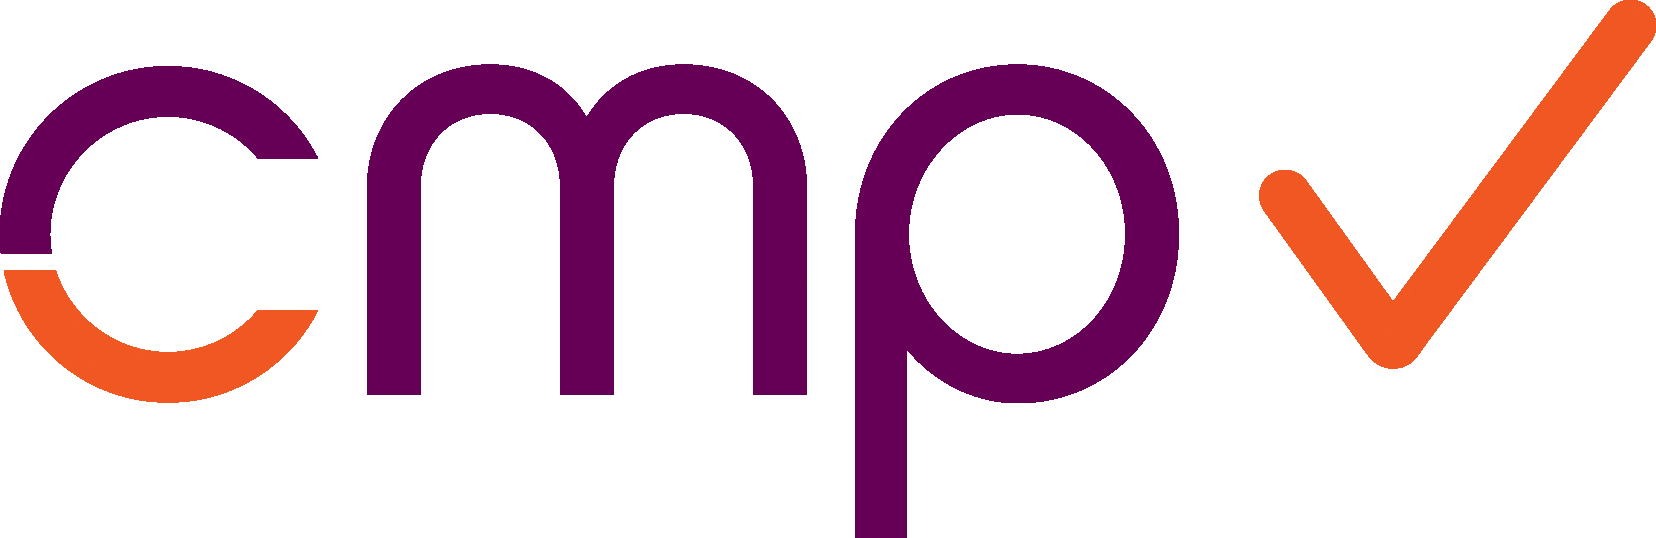 CMP Logo